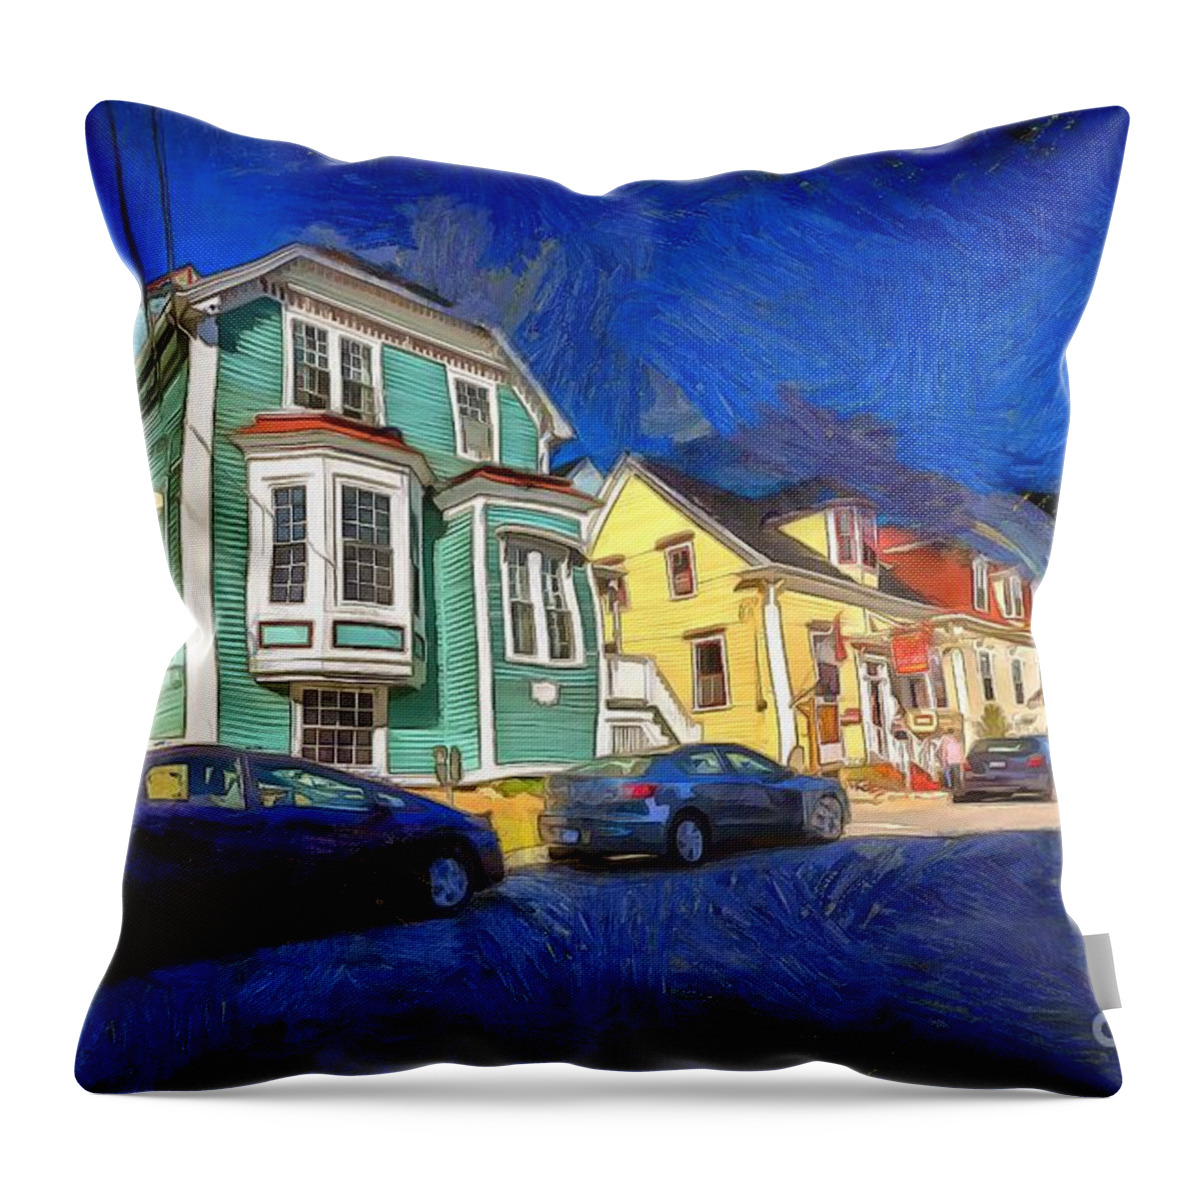 Lunenburg Throw Pillow featuring the digital art Lunenburg by Eva Lechner